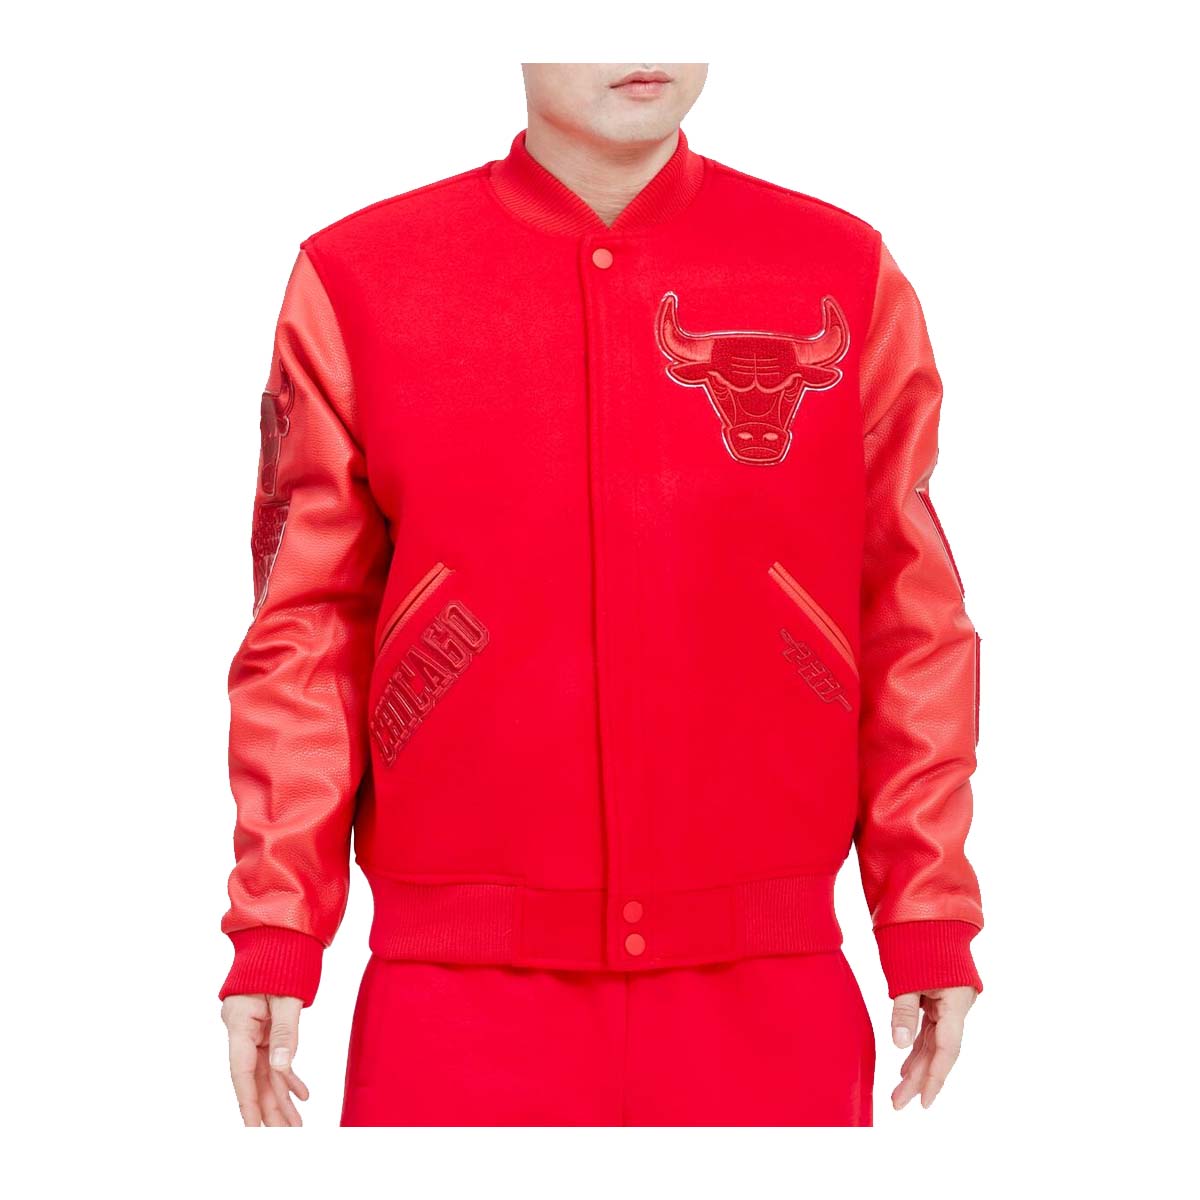 Men’s Pro Standard Chicago Bulls Varsity Jacket